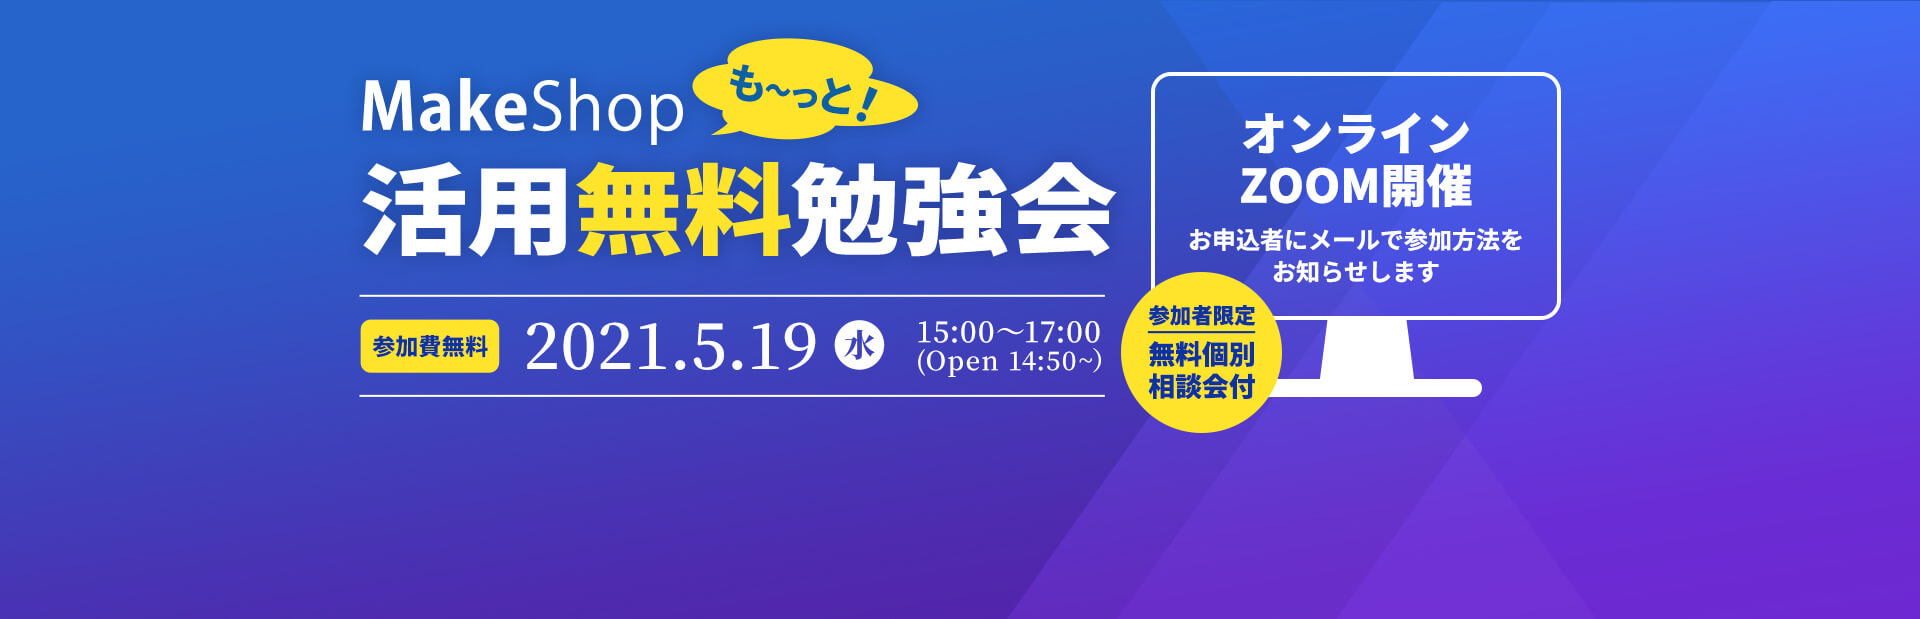 MakeShop活用無料勉強会 2021.5.19(水) 15:00〜17:00 (Open 14:50~）参加費無料 オンラインZOOM開催